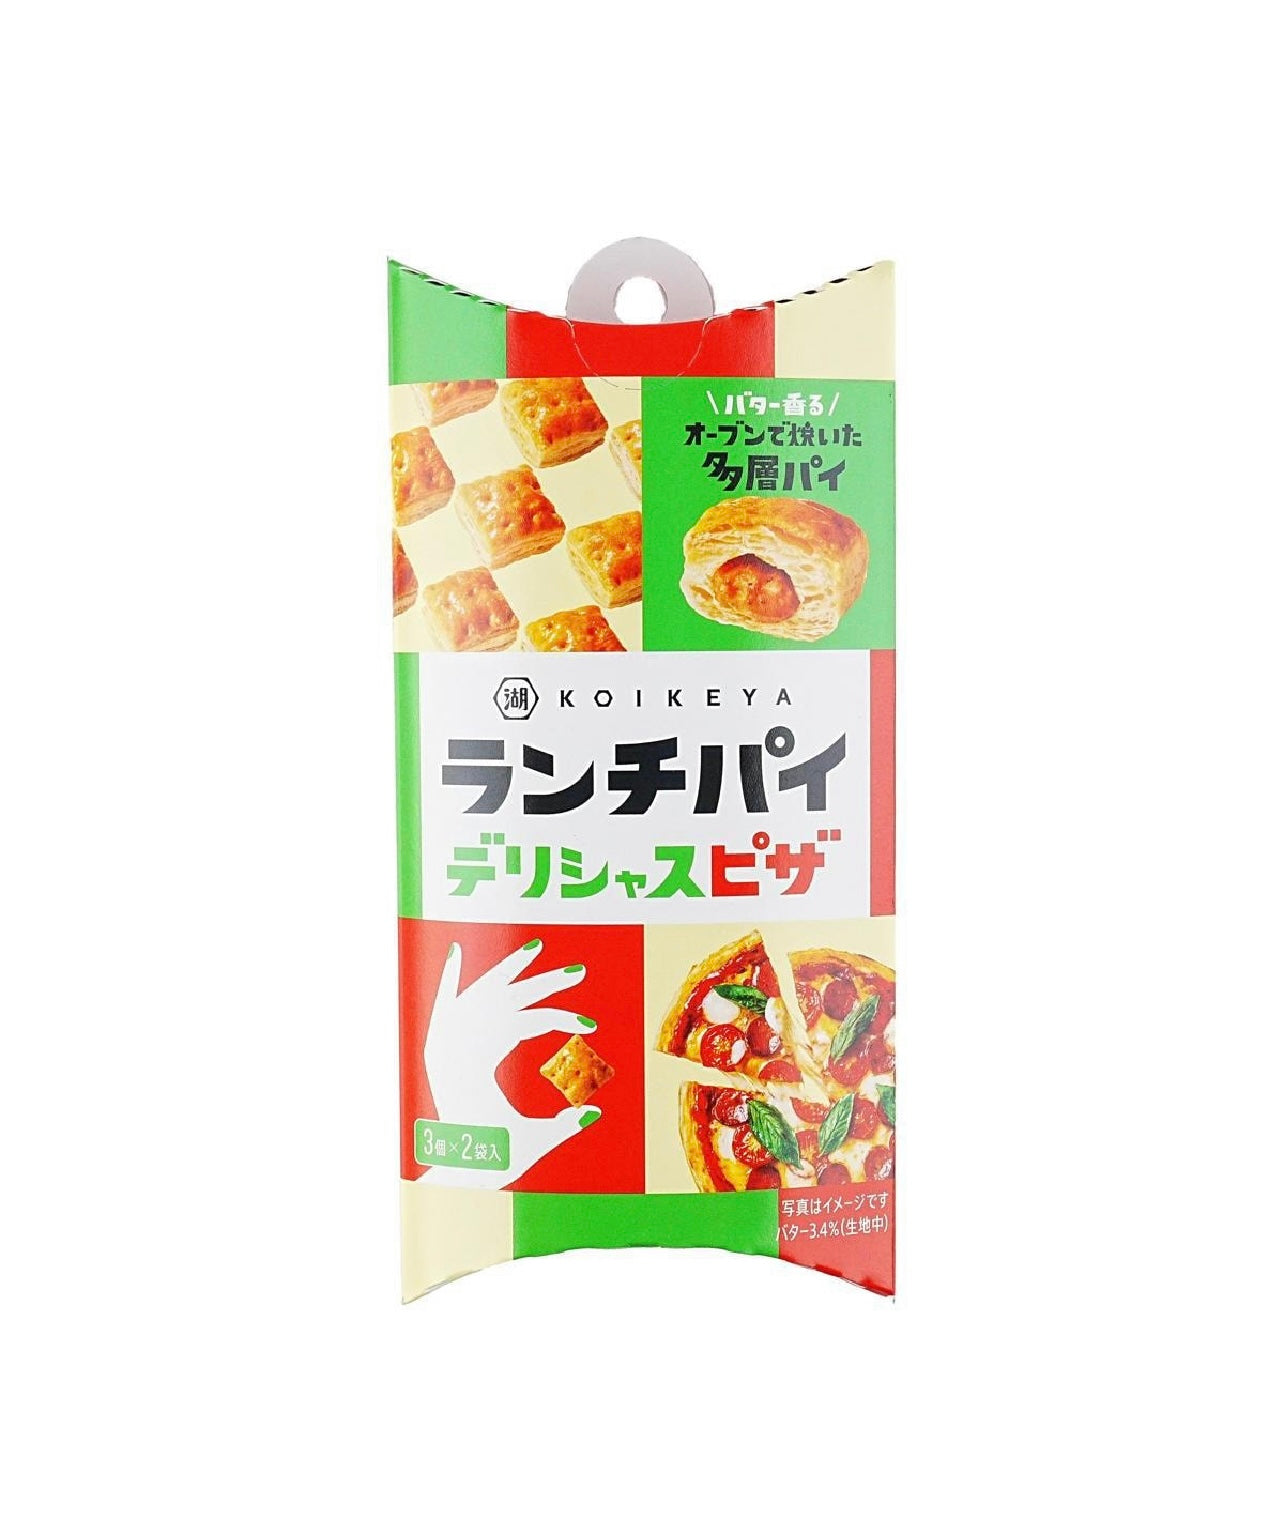 KOIKEYA Lunch Pie Pizza Flavor Biscuit 1.16 oz